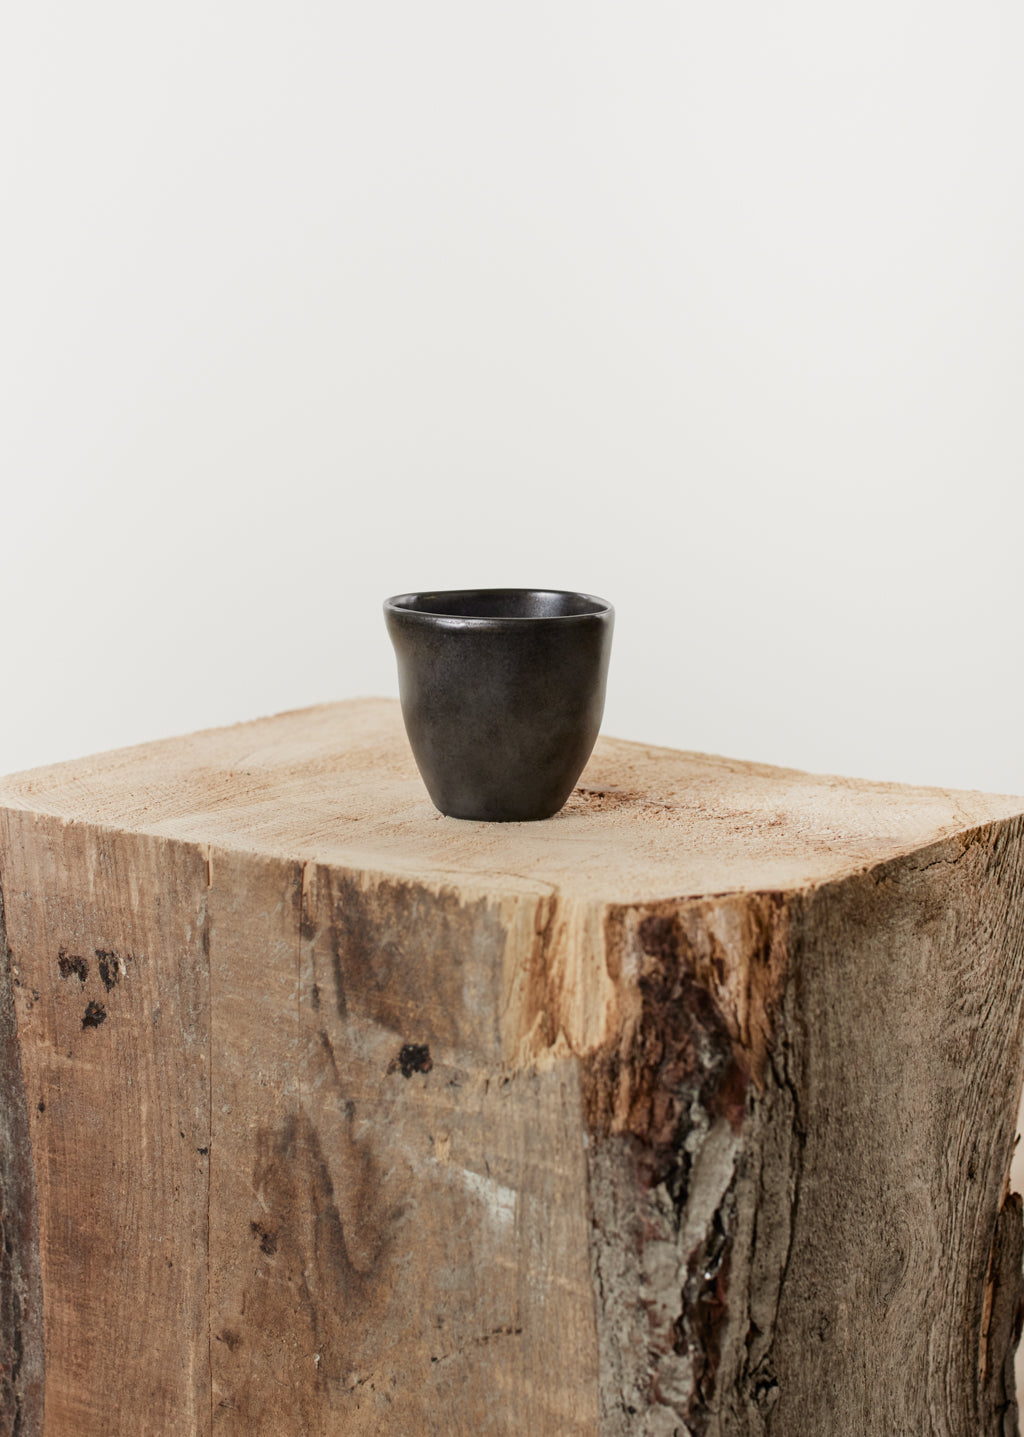 Small Black Ceramic Cup